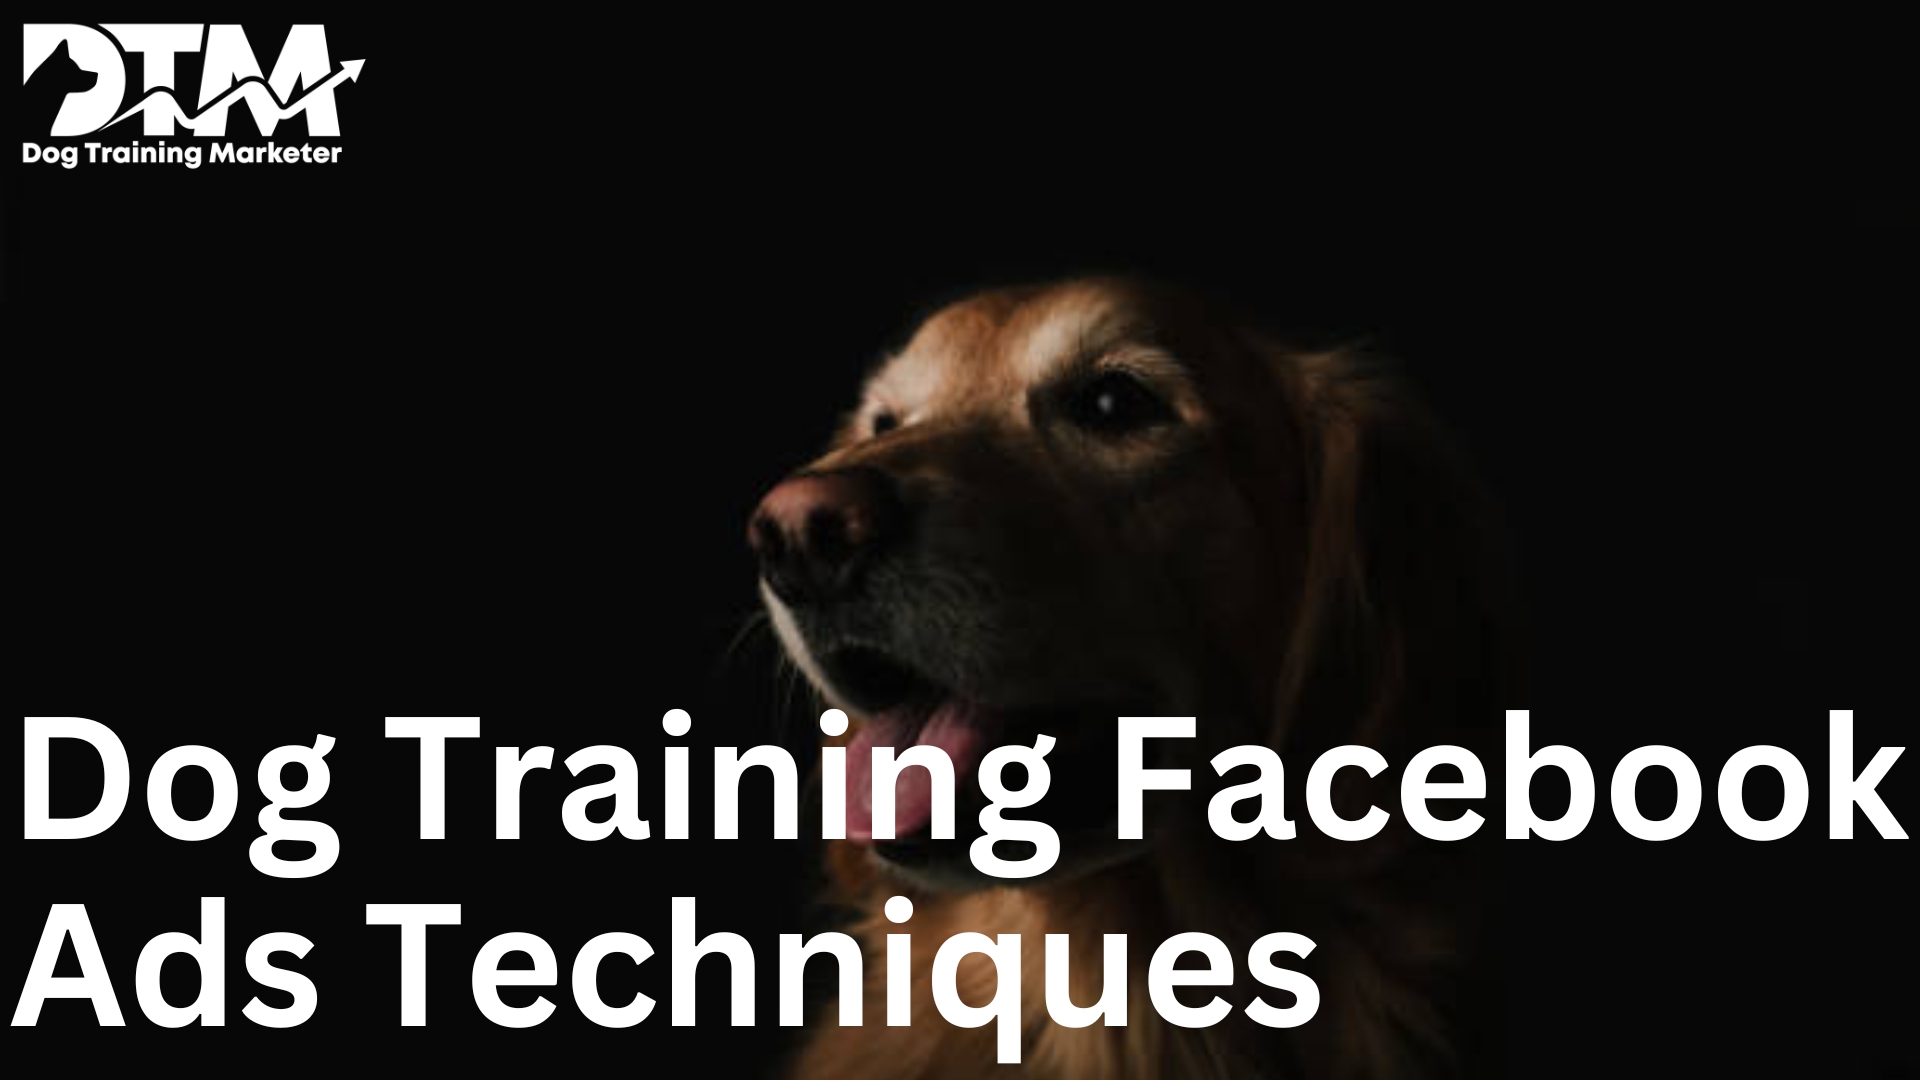 Dog Training Facebook Ads Techniques - Target Dog Parents on Facebook